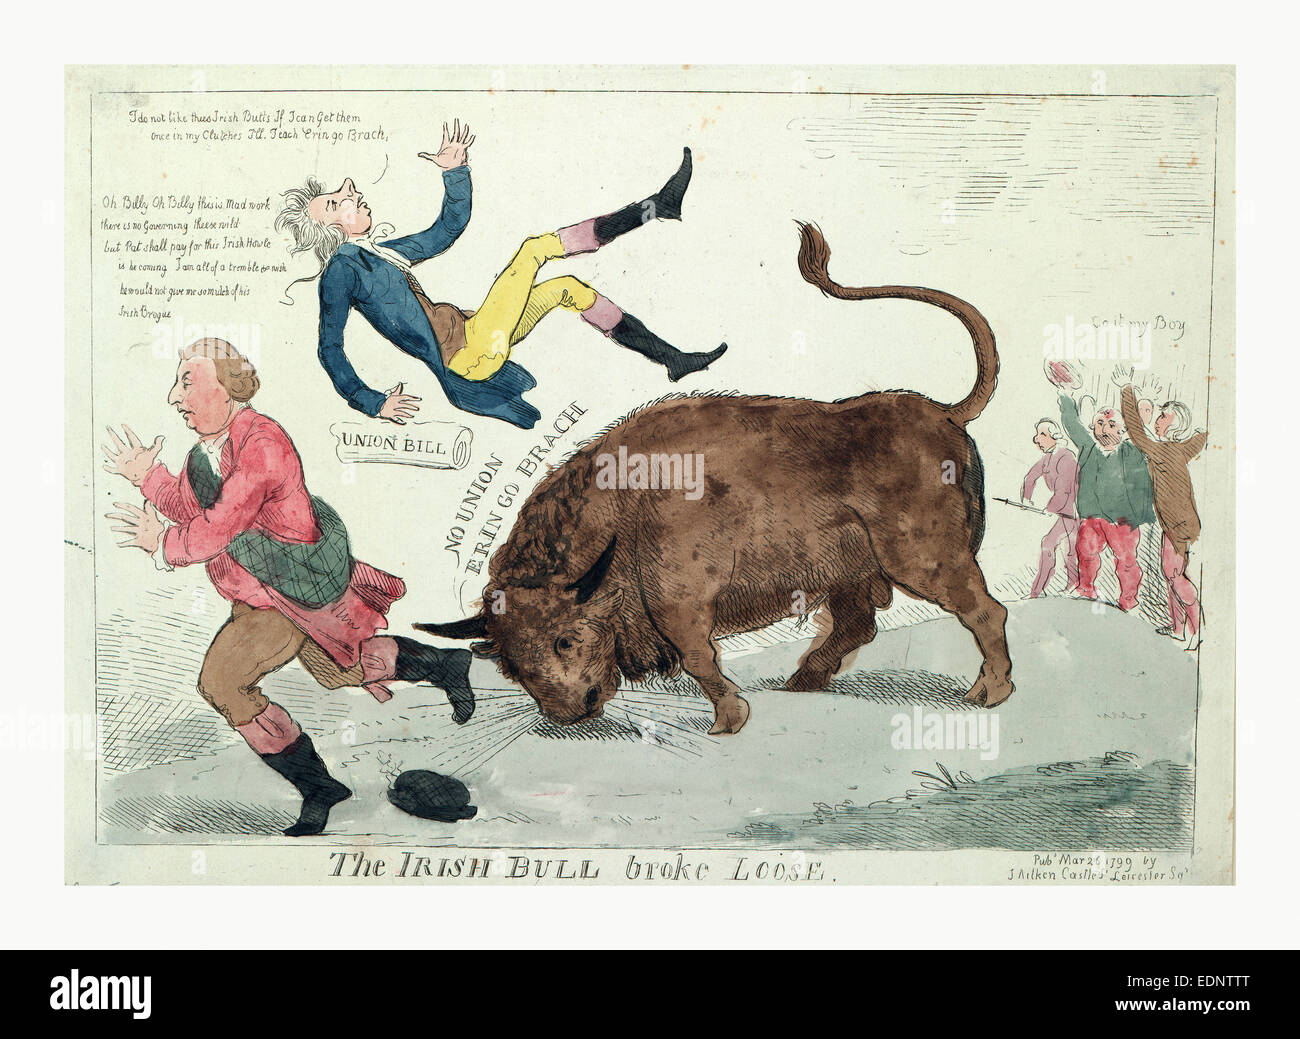 The Irish bull broke loose, Cruikshank, Isaac, 1756?-1811?, engraving 1799,  the Irish Bull tossing William Pitt into the air Stock Photo